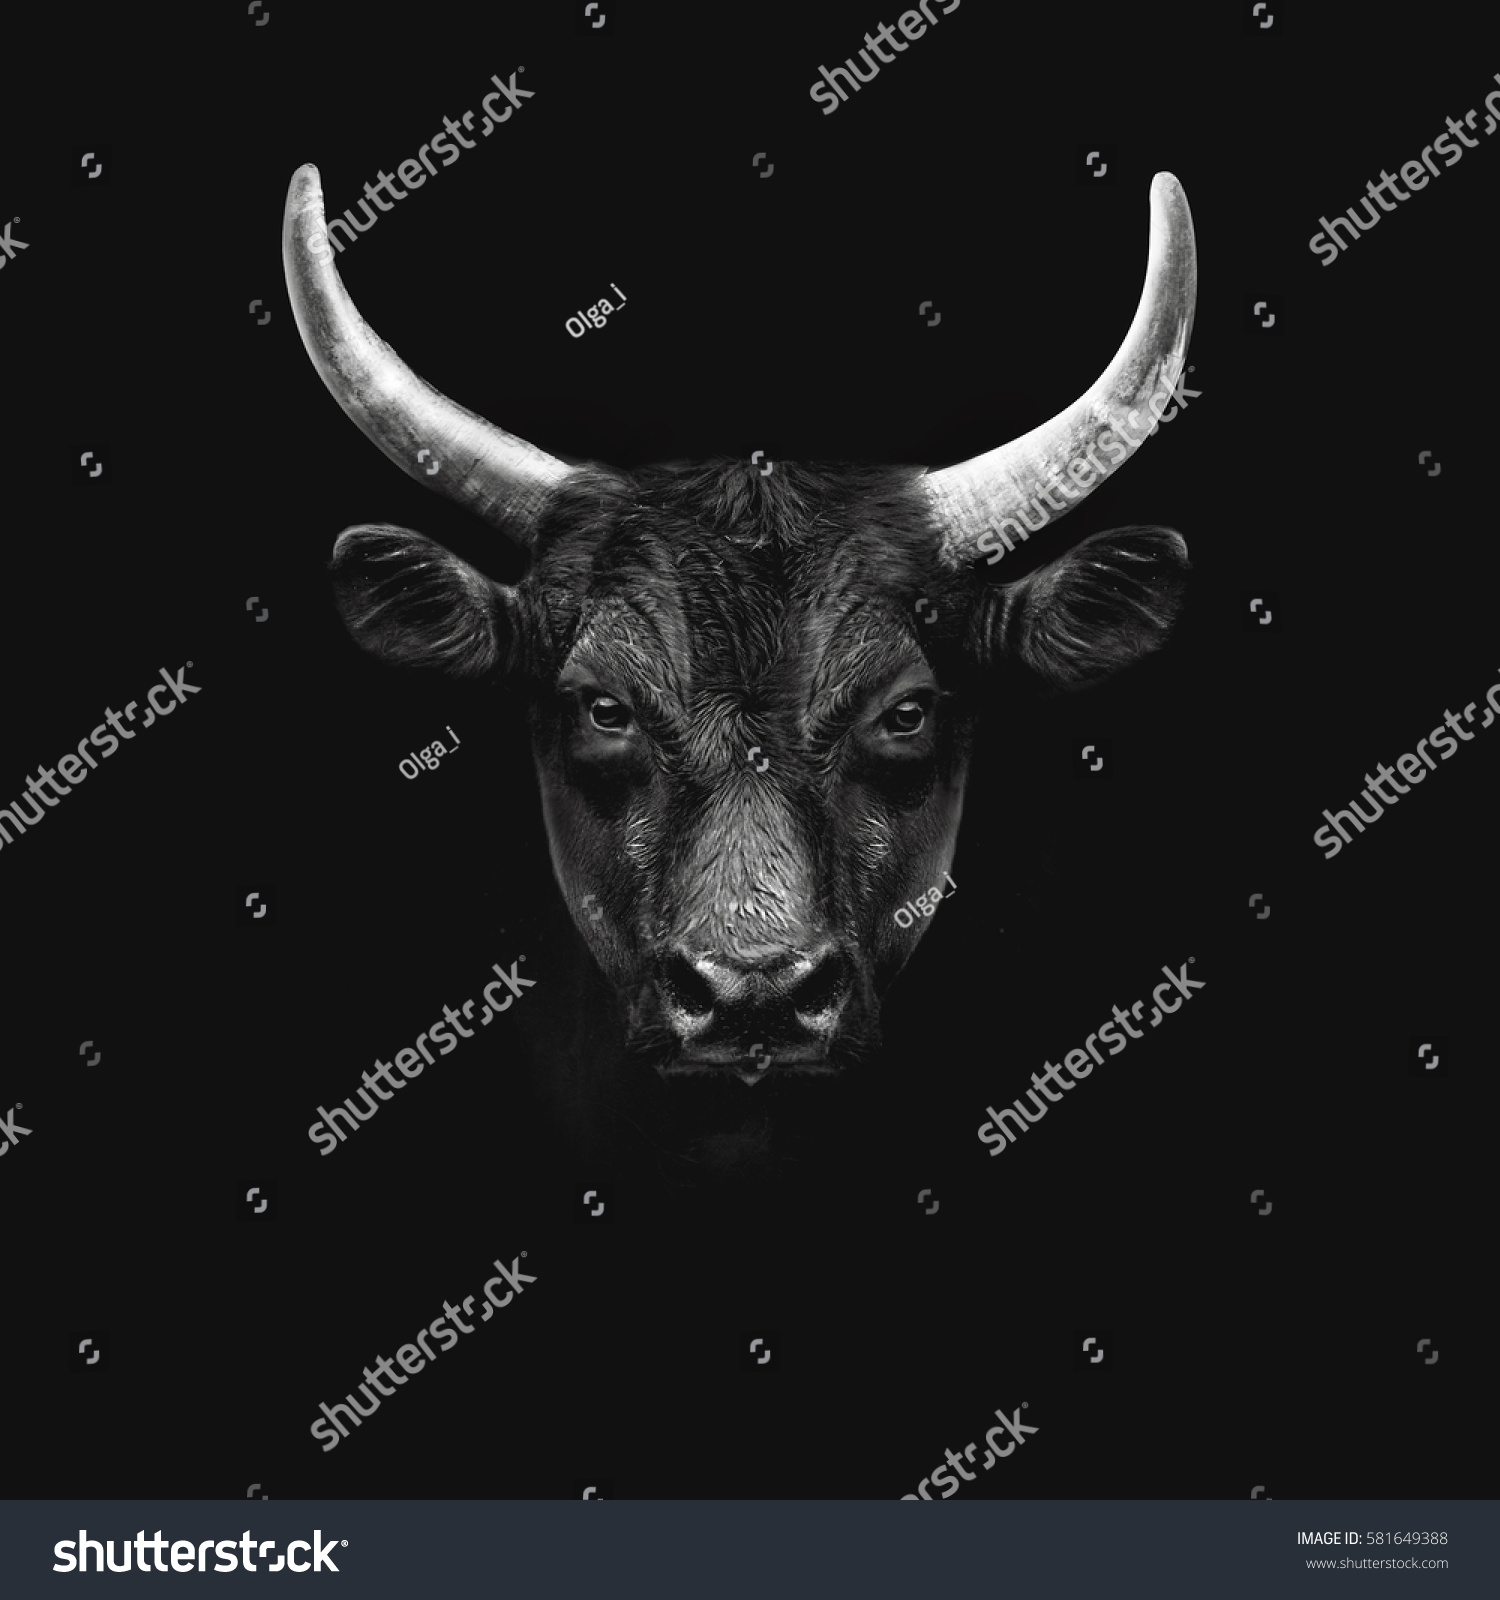 black camargue bull face portrait isolated on white background #581649388